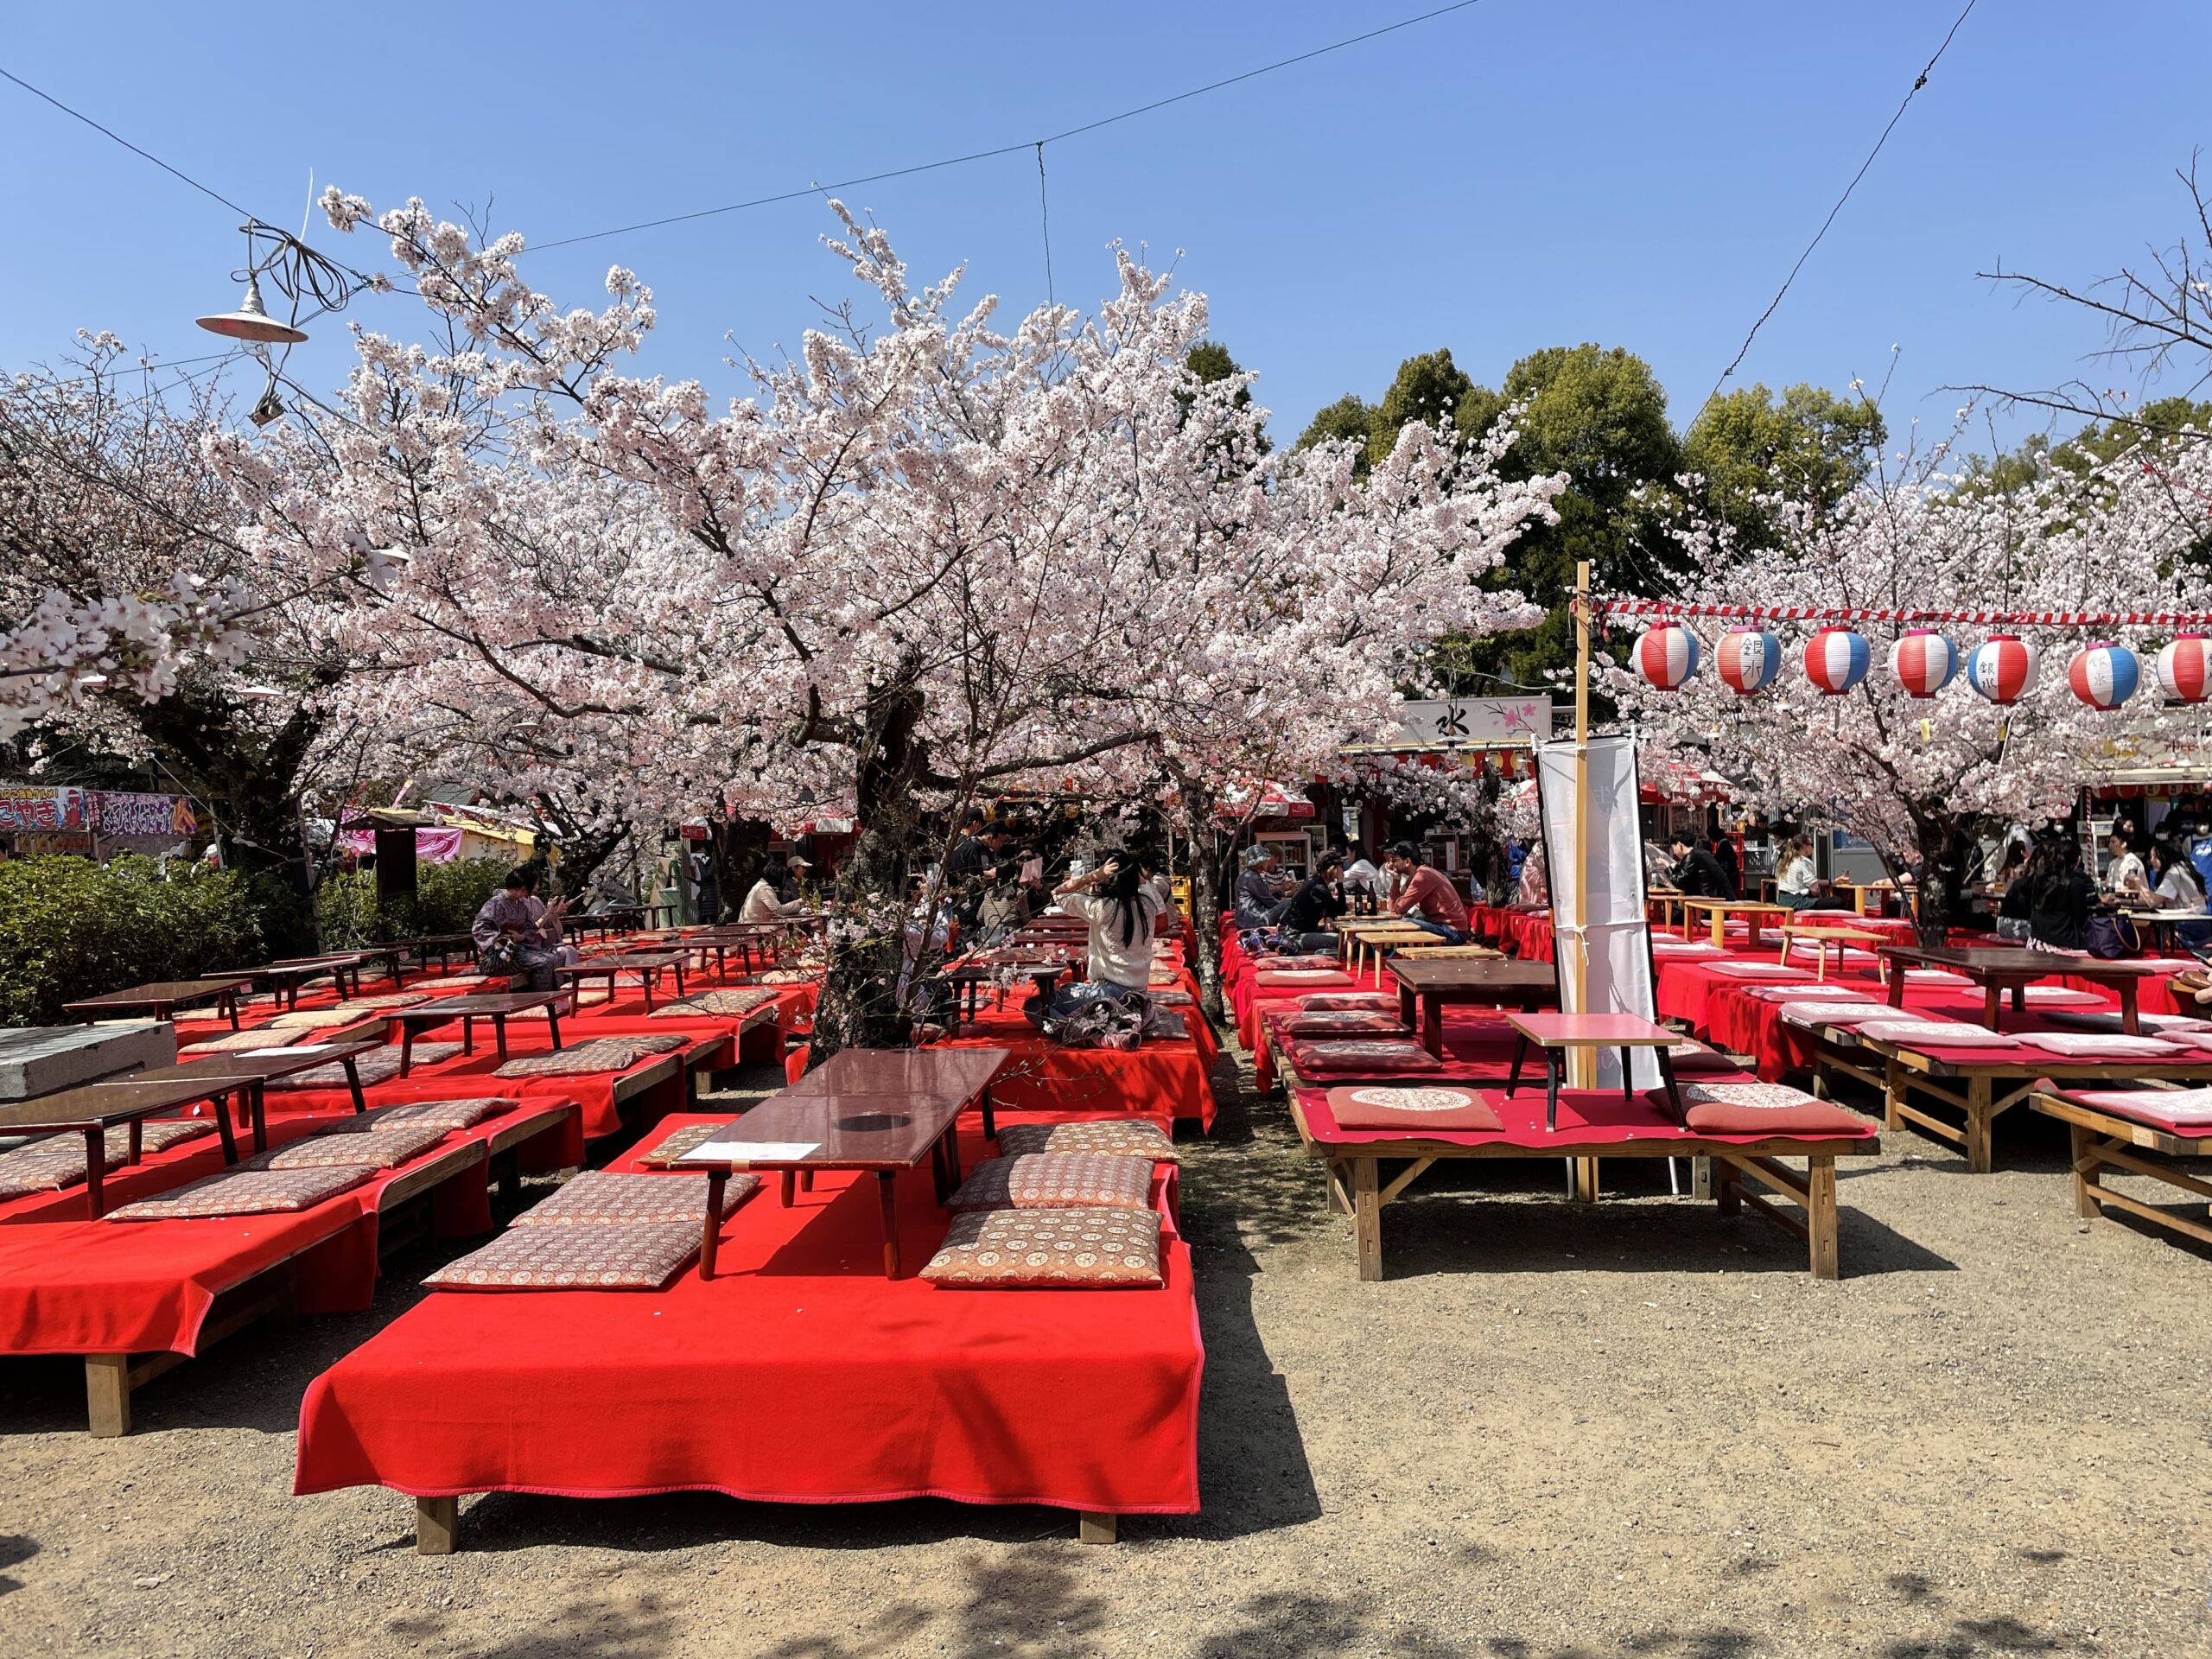 japan cherry blossoms photography location where to find them best photo spots kyoto tokyo osaka nara